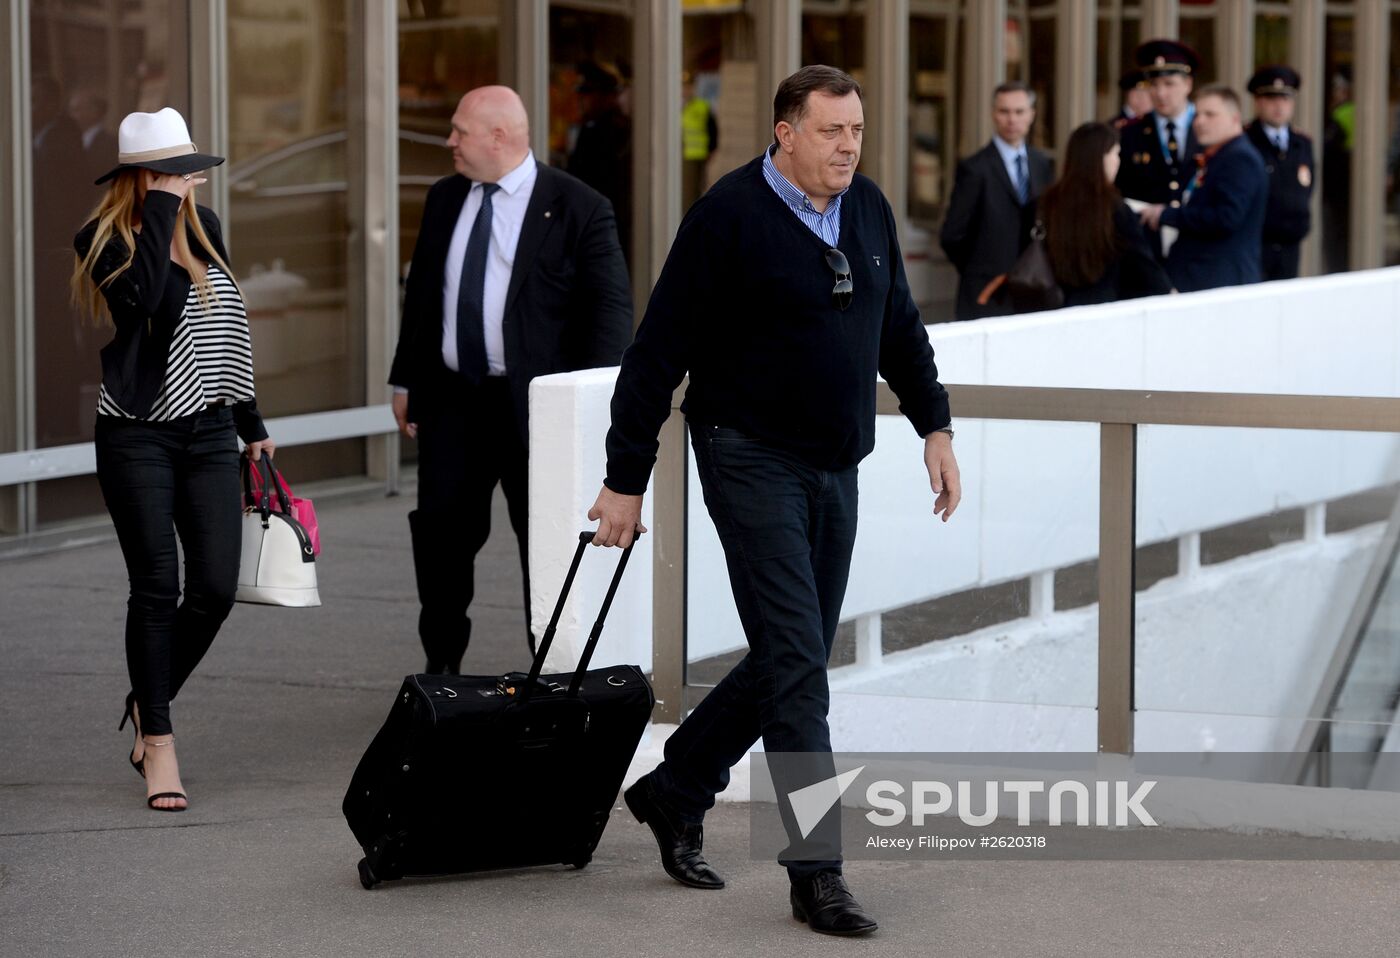 Milorad Dodik, President of Republika Srpska of Bosnia and Herzegovina, arrives in Moscow